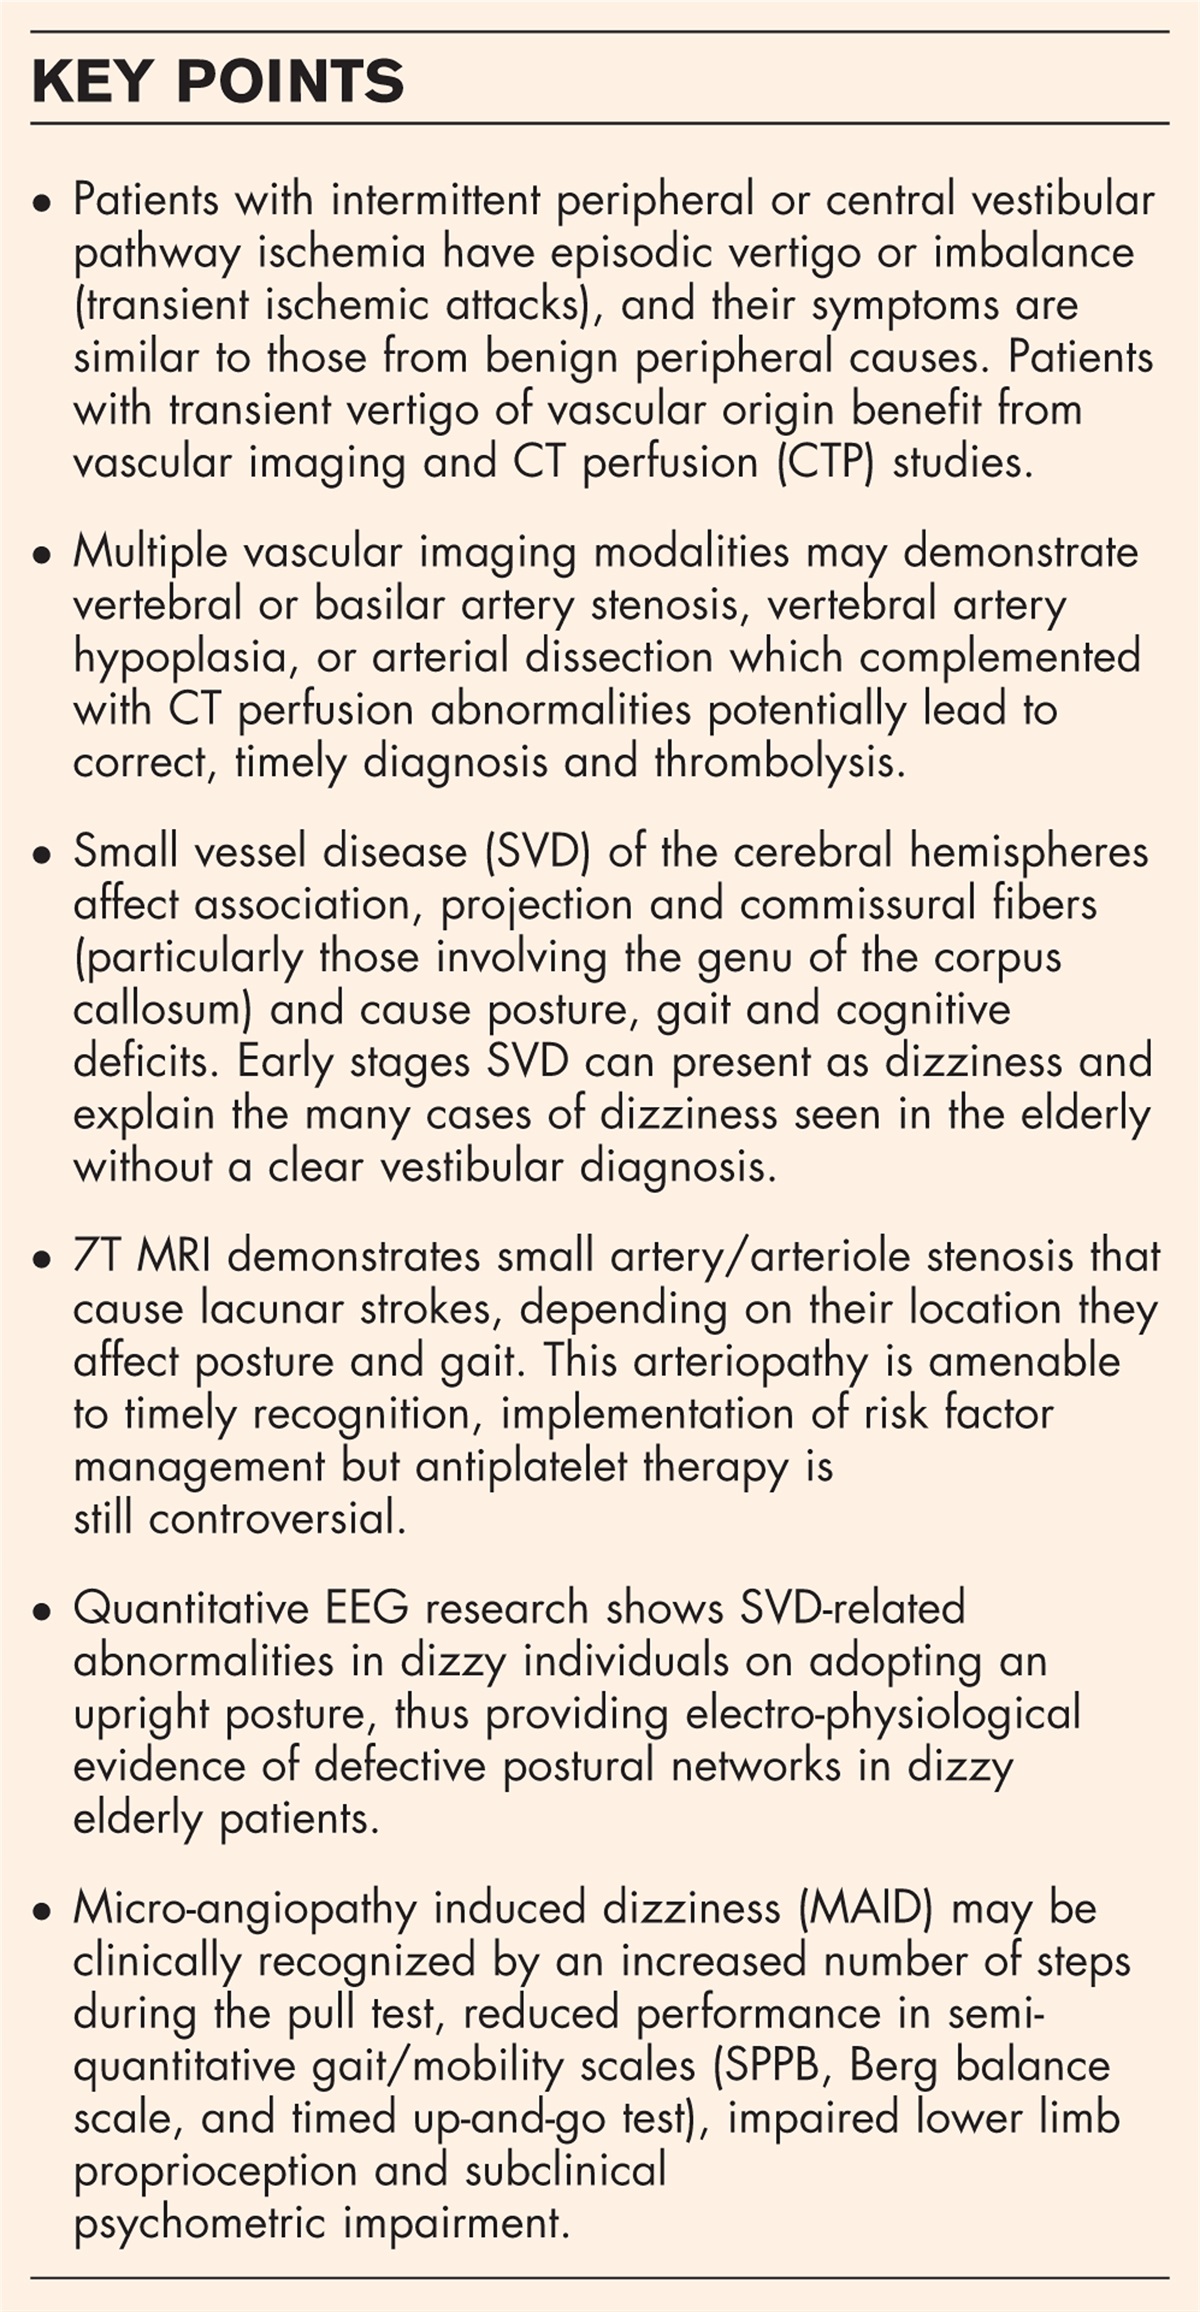 Vascular neuro-otology: vestibular transient ischemic attacks and chronic dizziness in the elderly